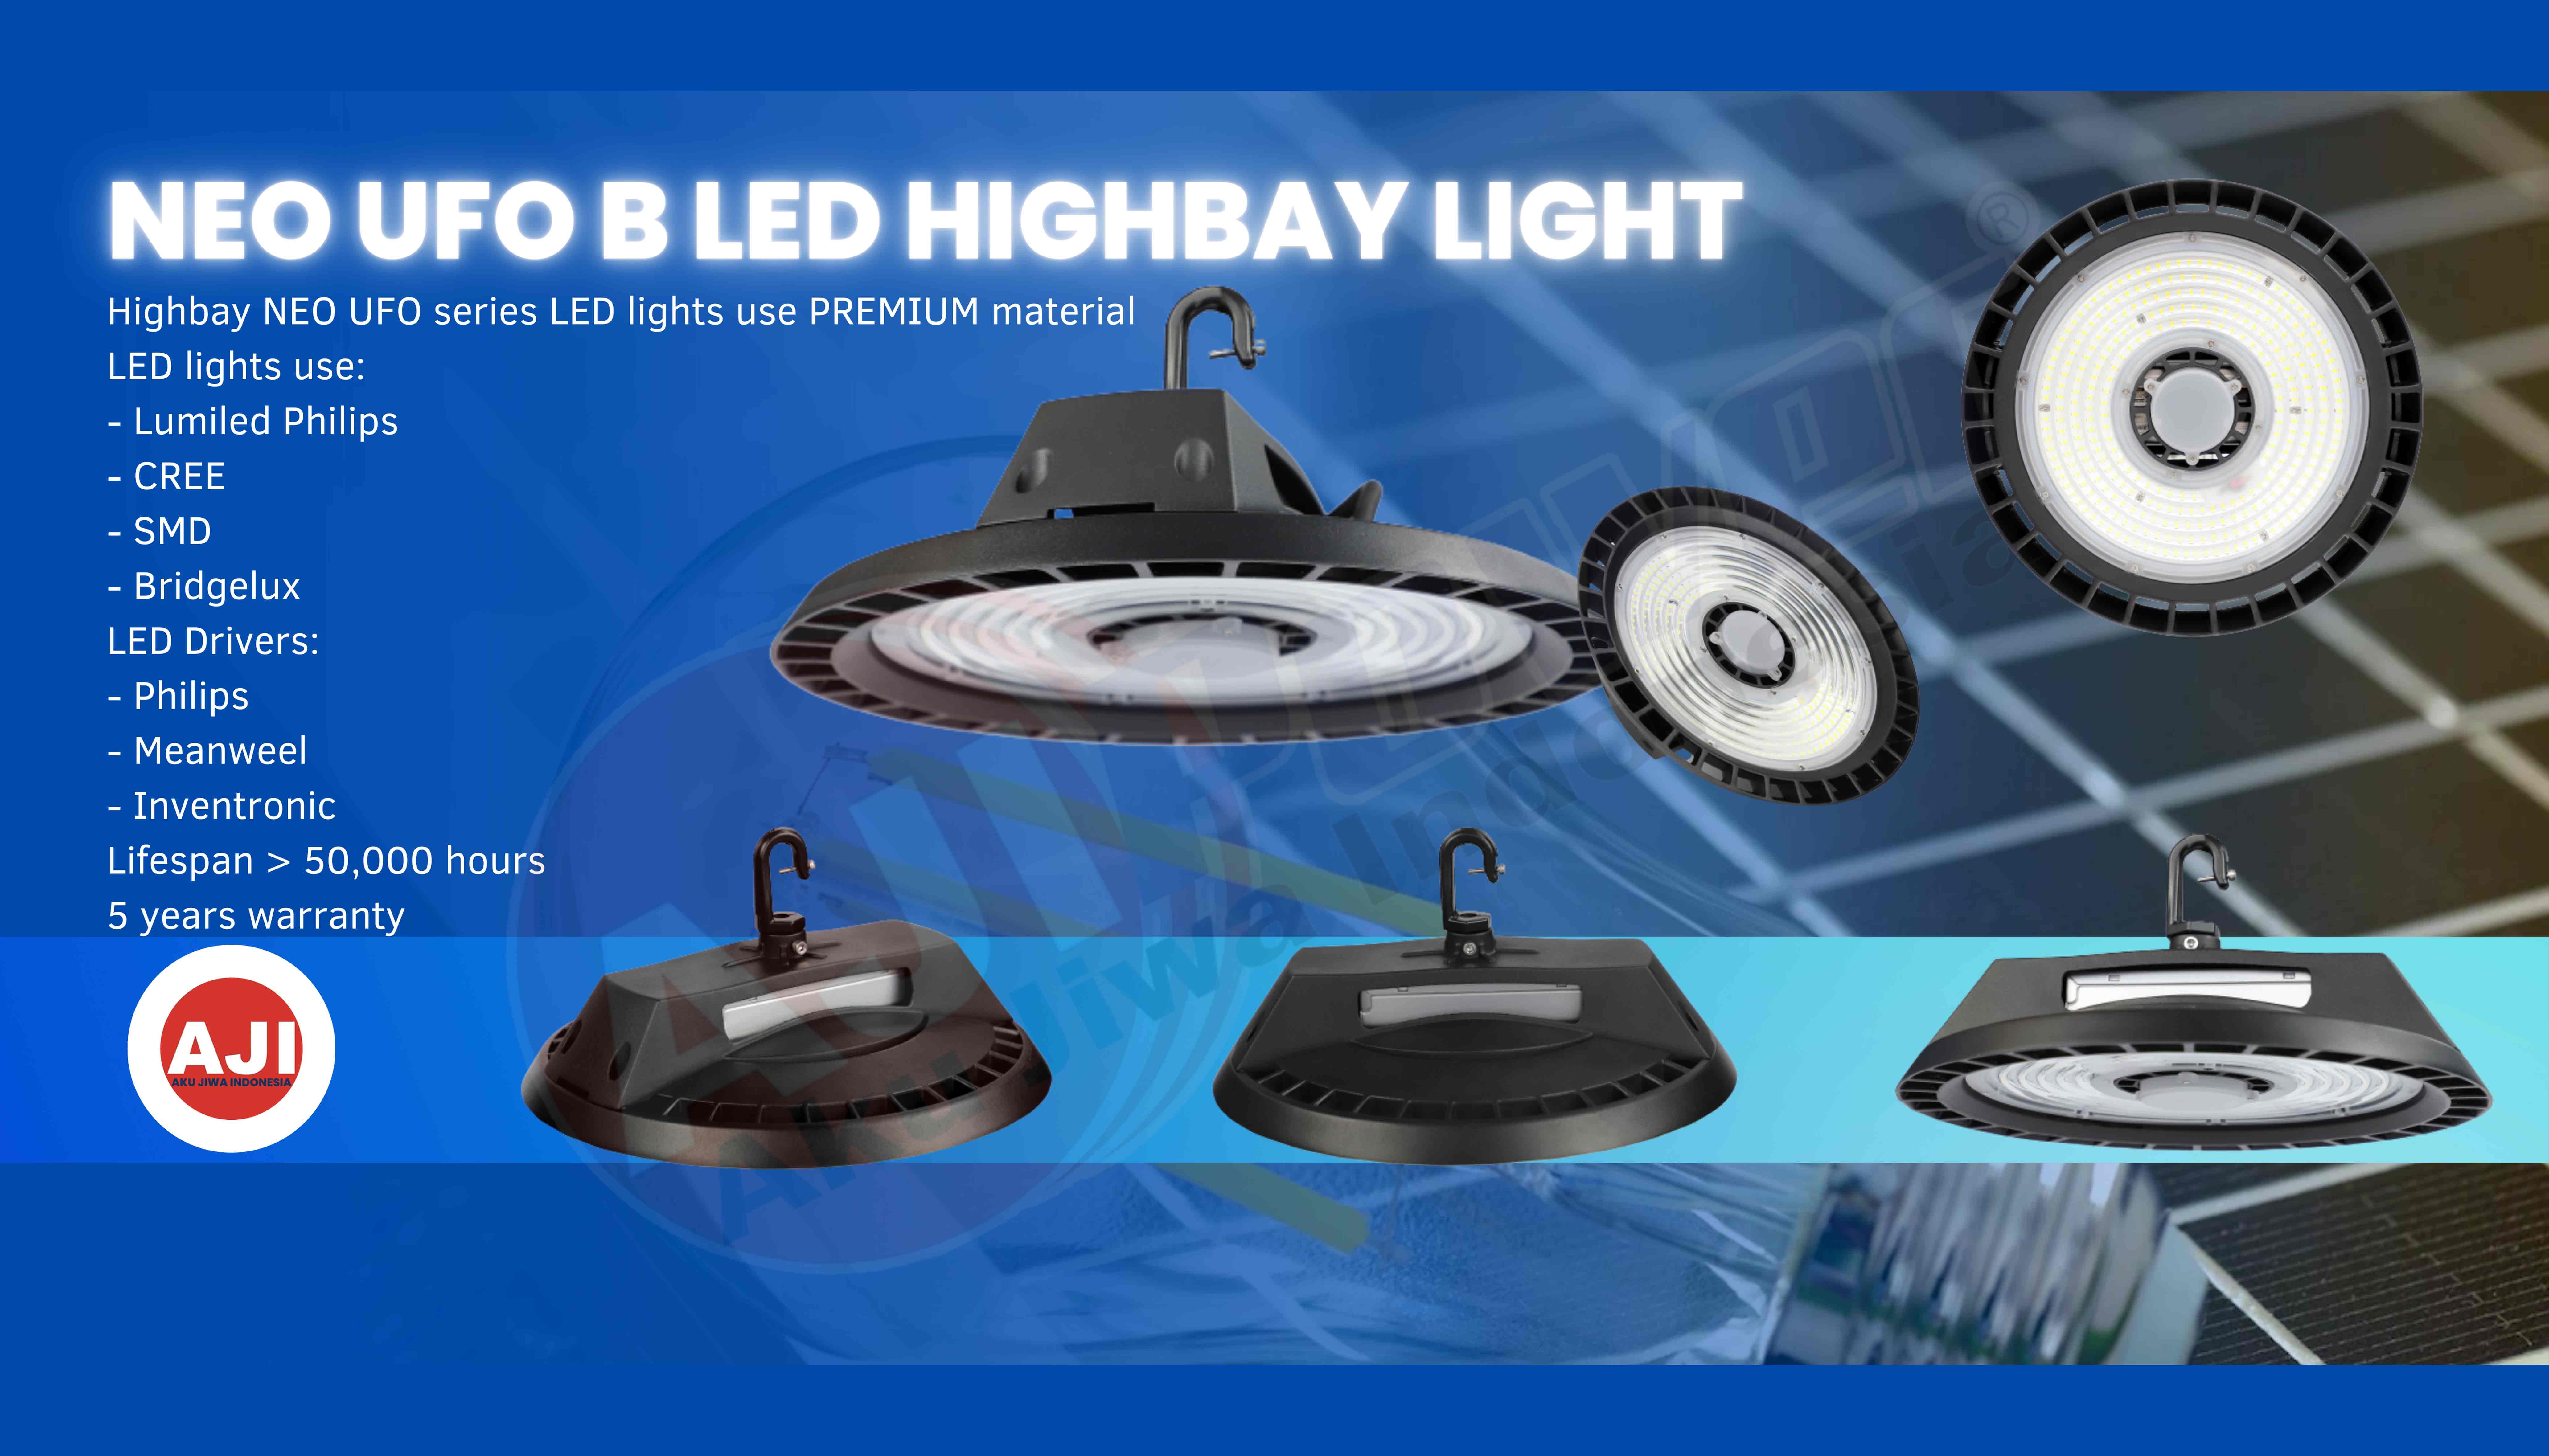 HBL-NS06-LED-HIGHBAY-LIGHT-LED